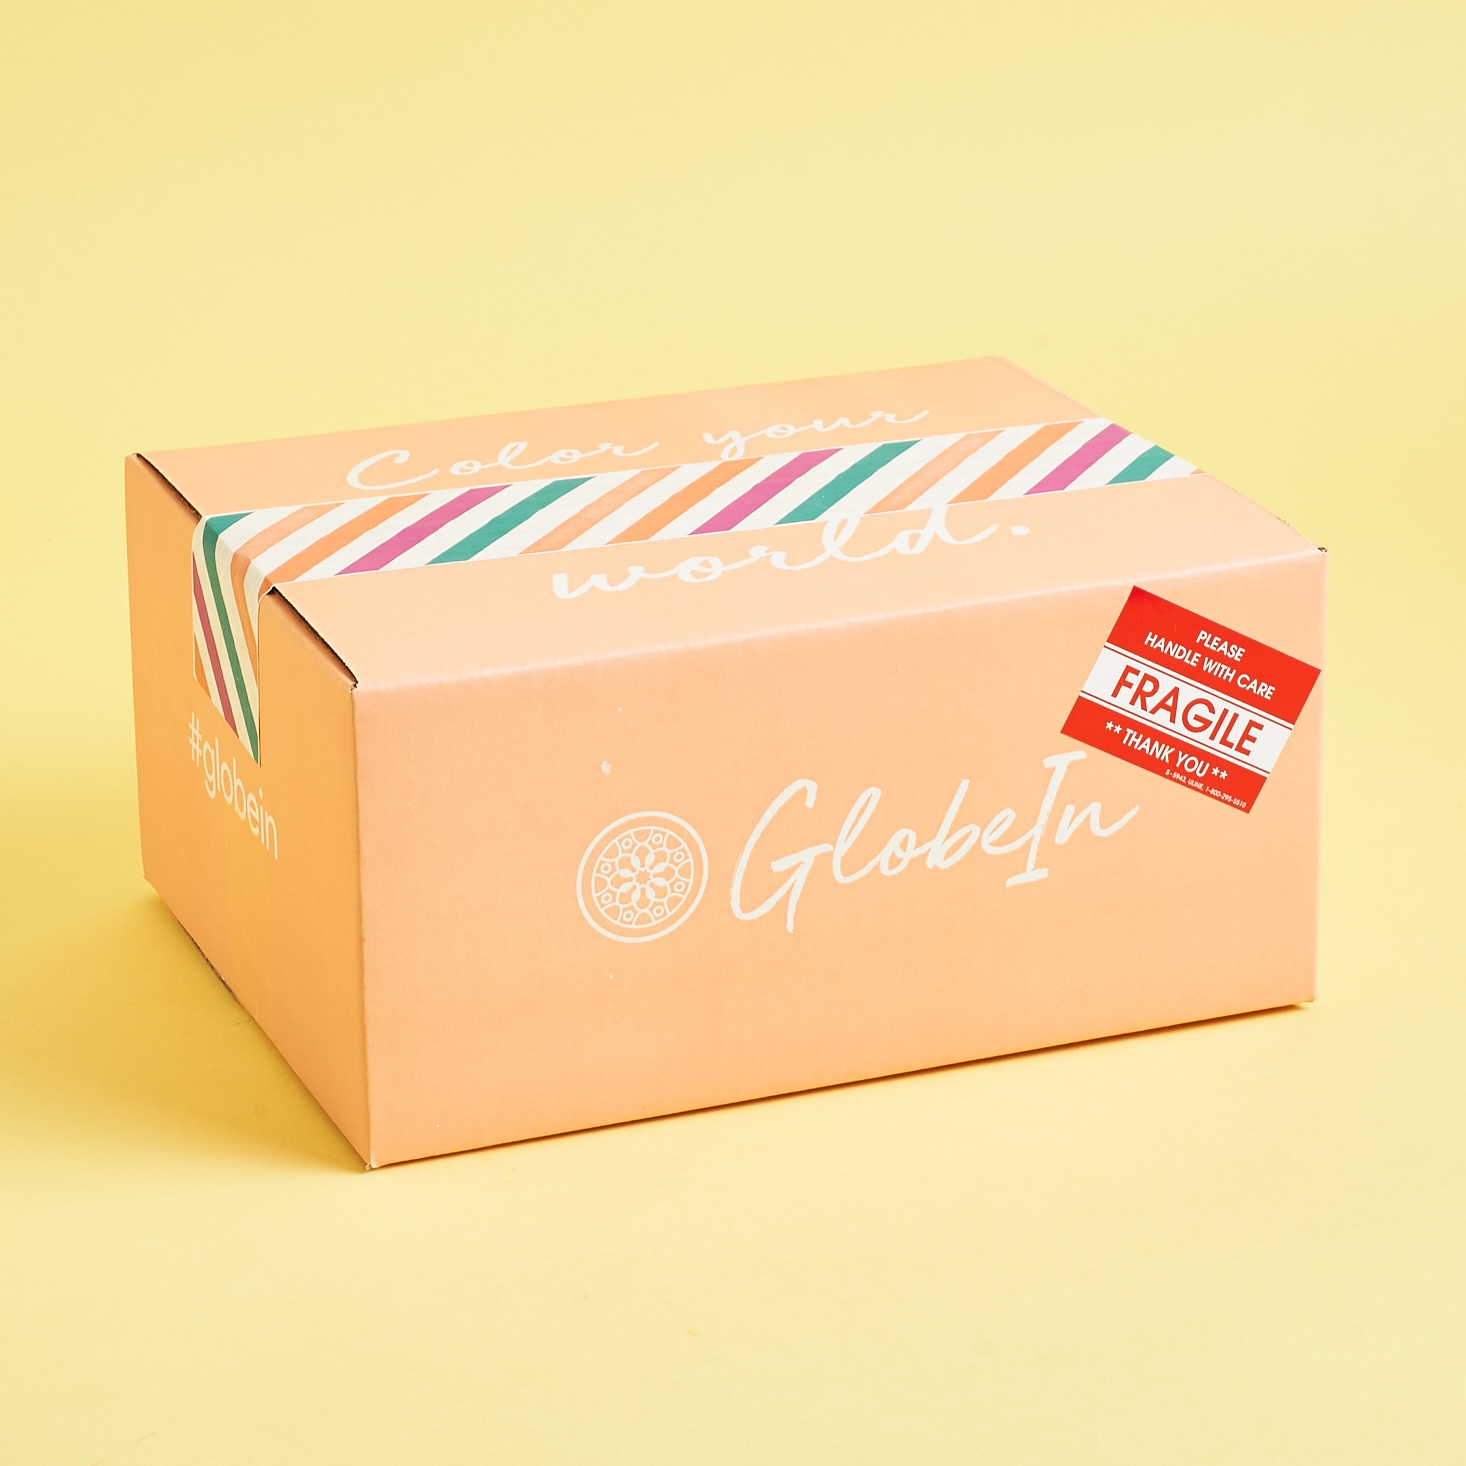 GlobeIn Artisan Box “Revive” Review + Coupon – October 2019